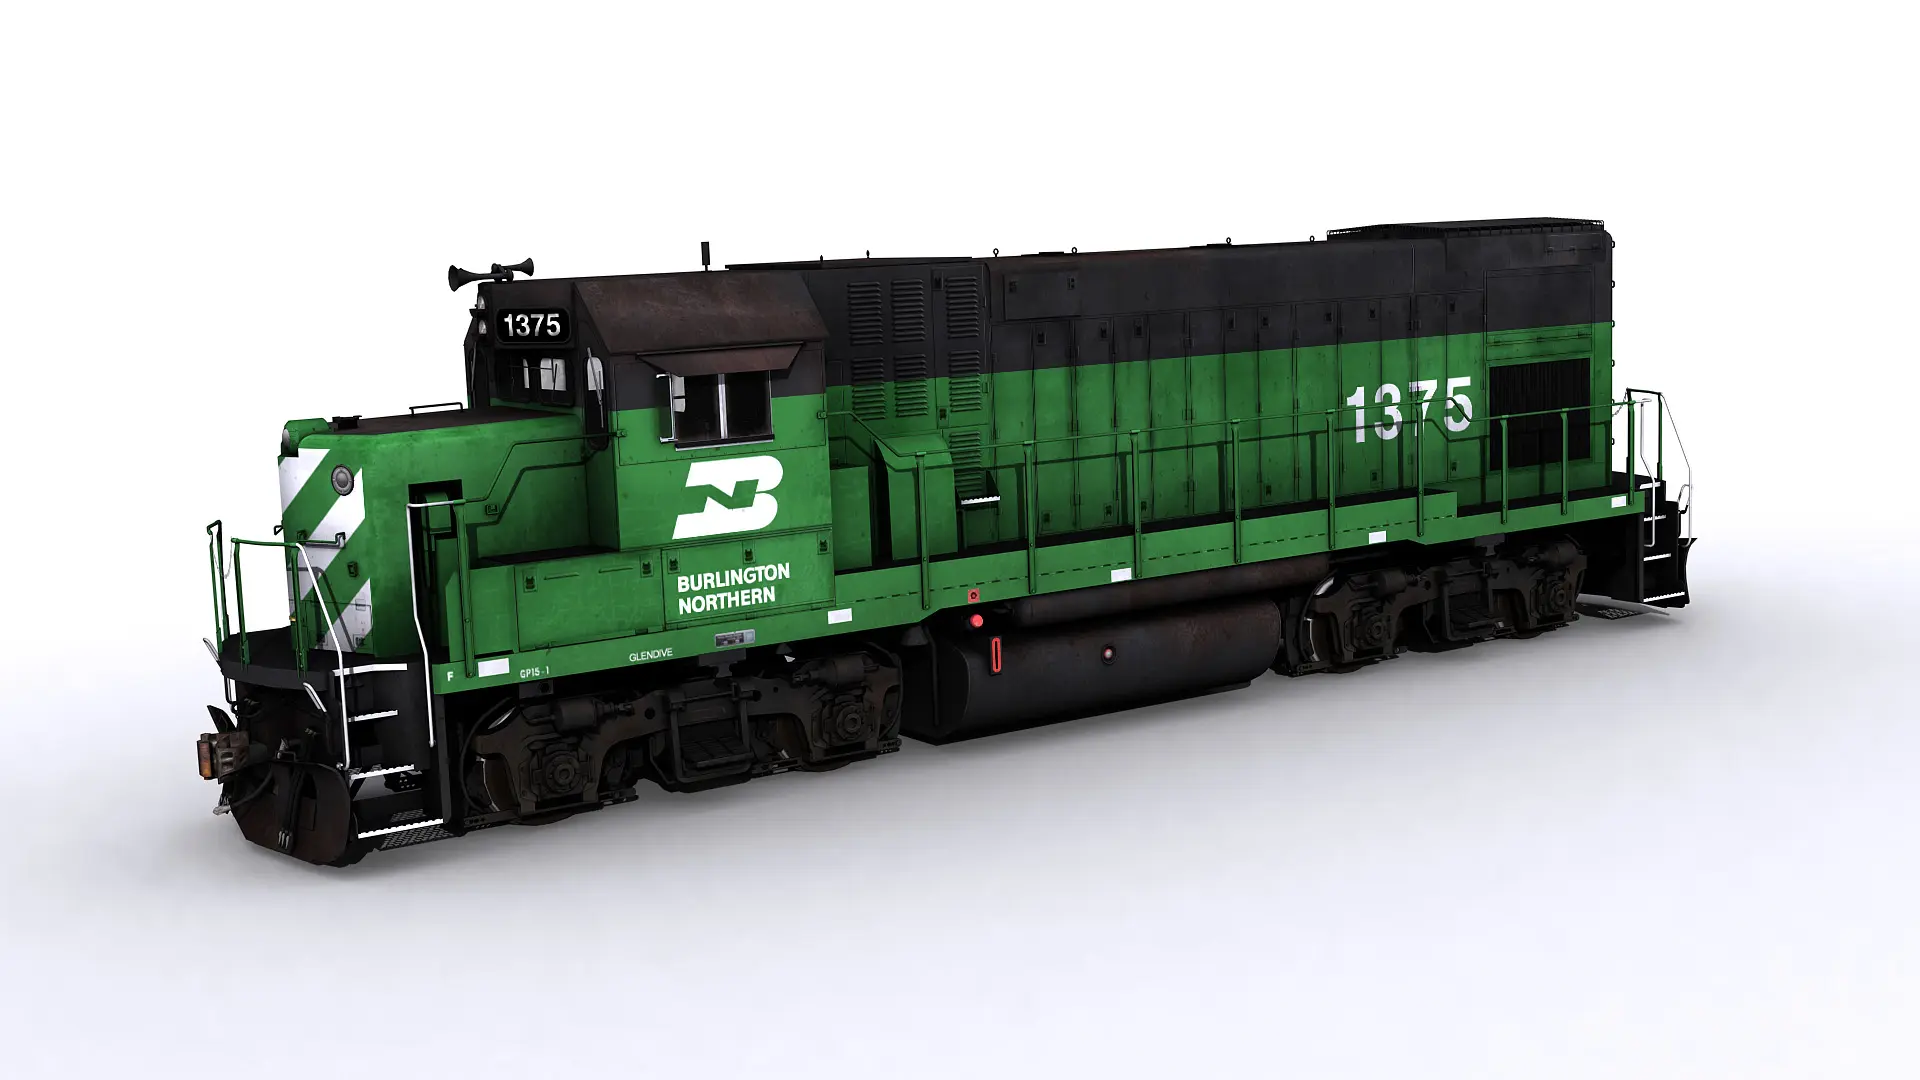 Bn zero one a green powerful rail engine